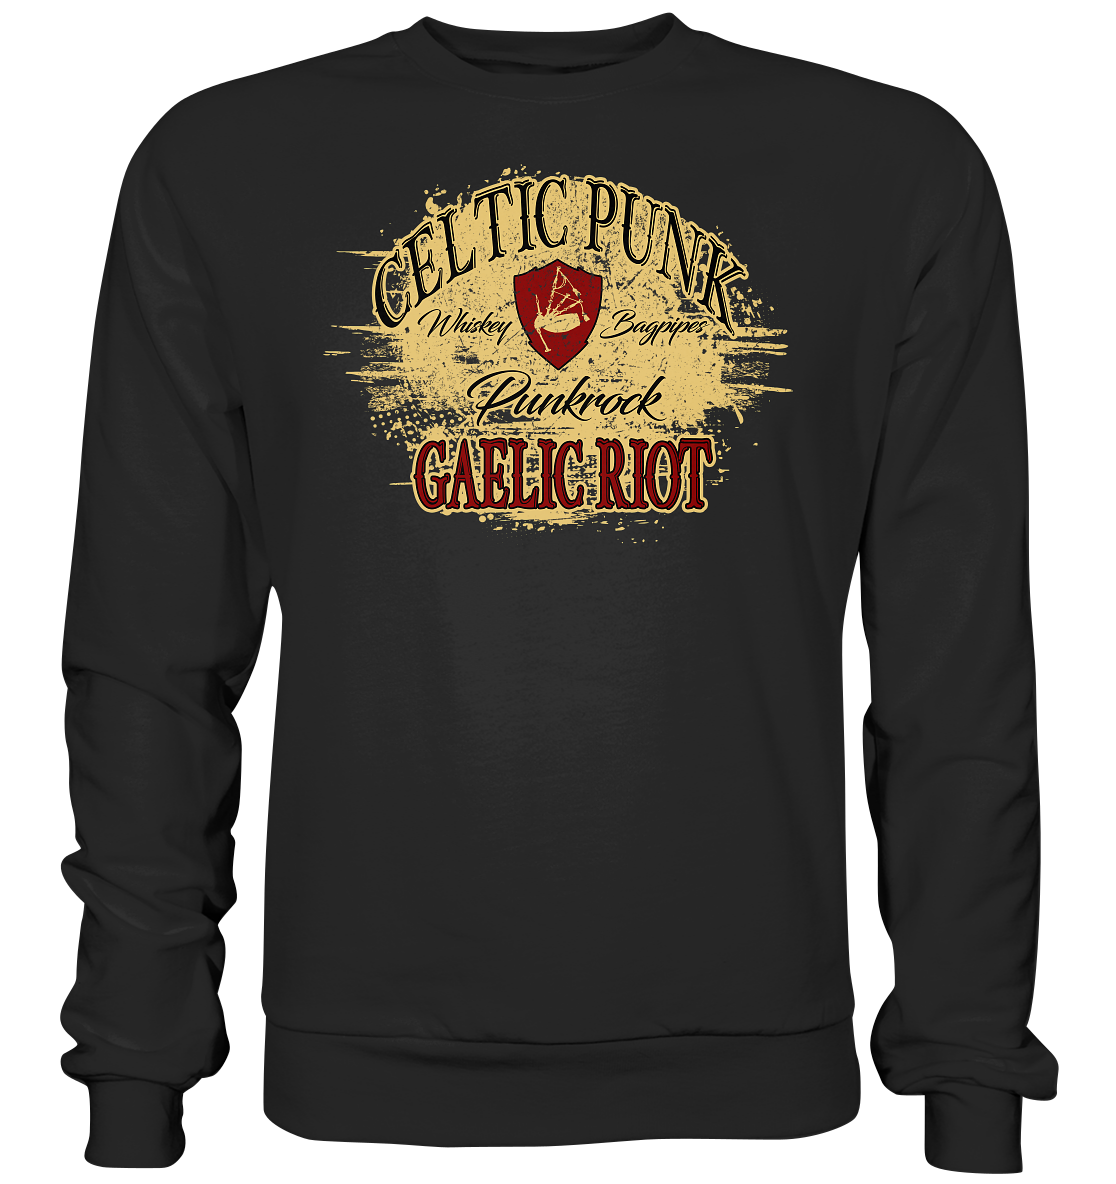 Celtic Punk "Gaelic Riot" - Basic Sweatshirt